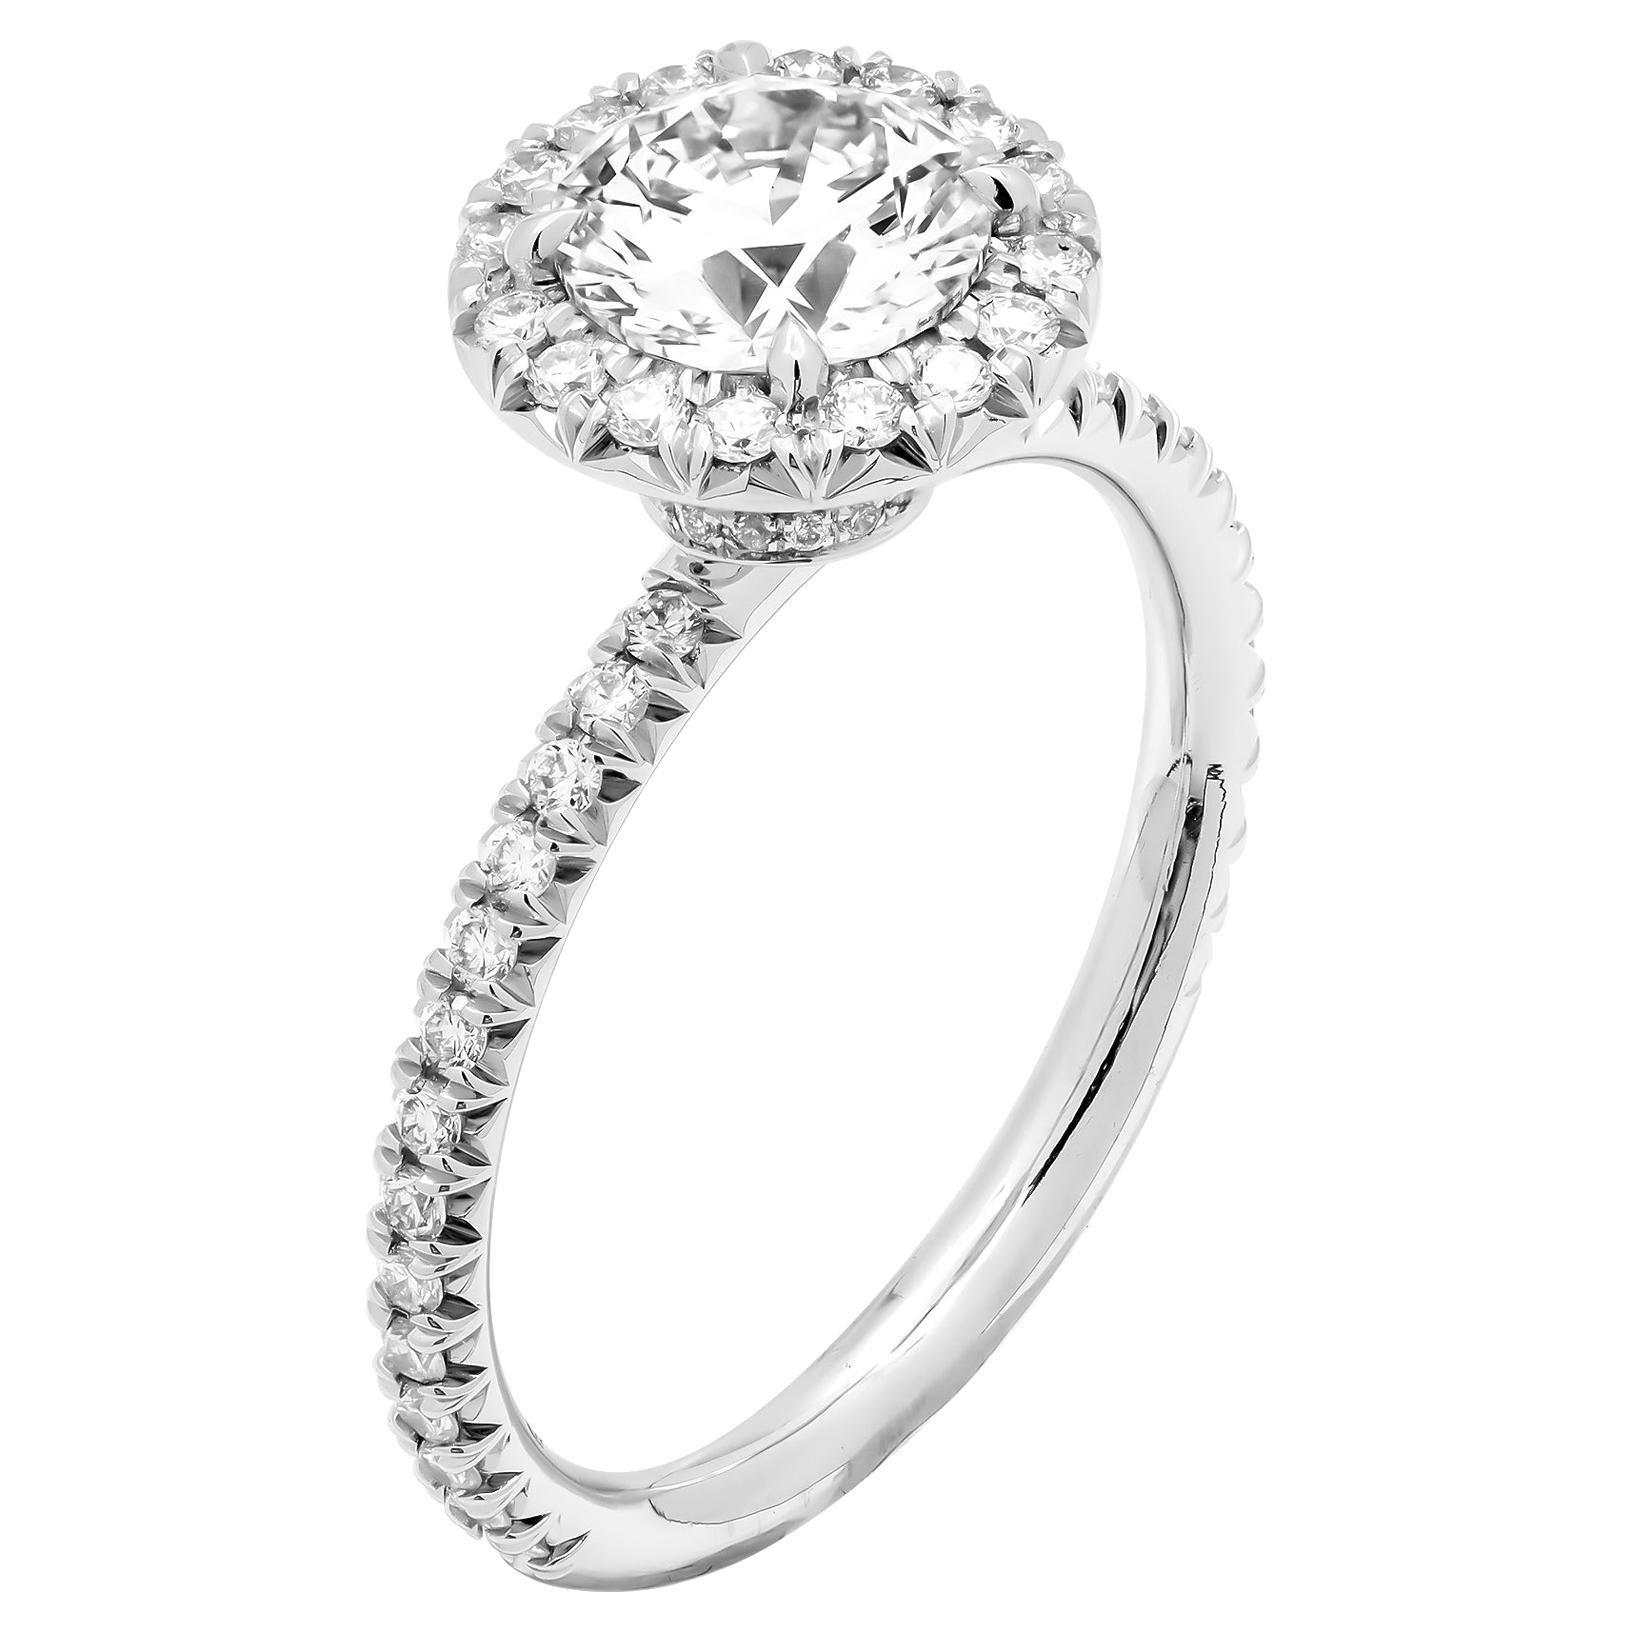 GIA Certified 1.02 Carat H VS2 Round Cut Diamond Engagement Ring